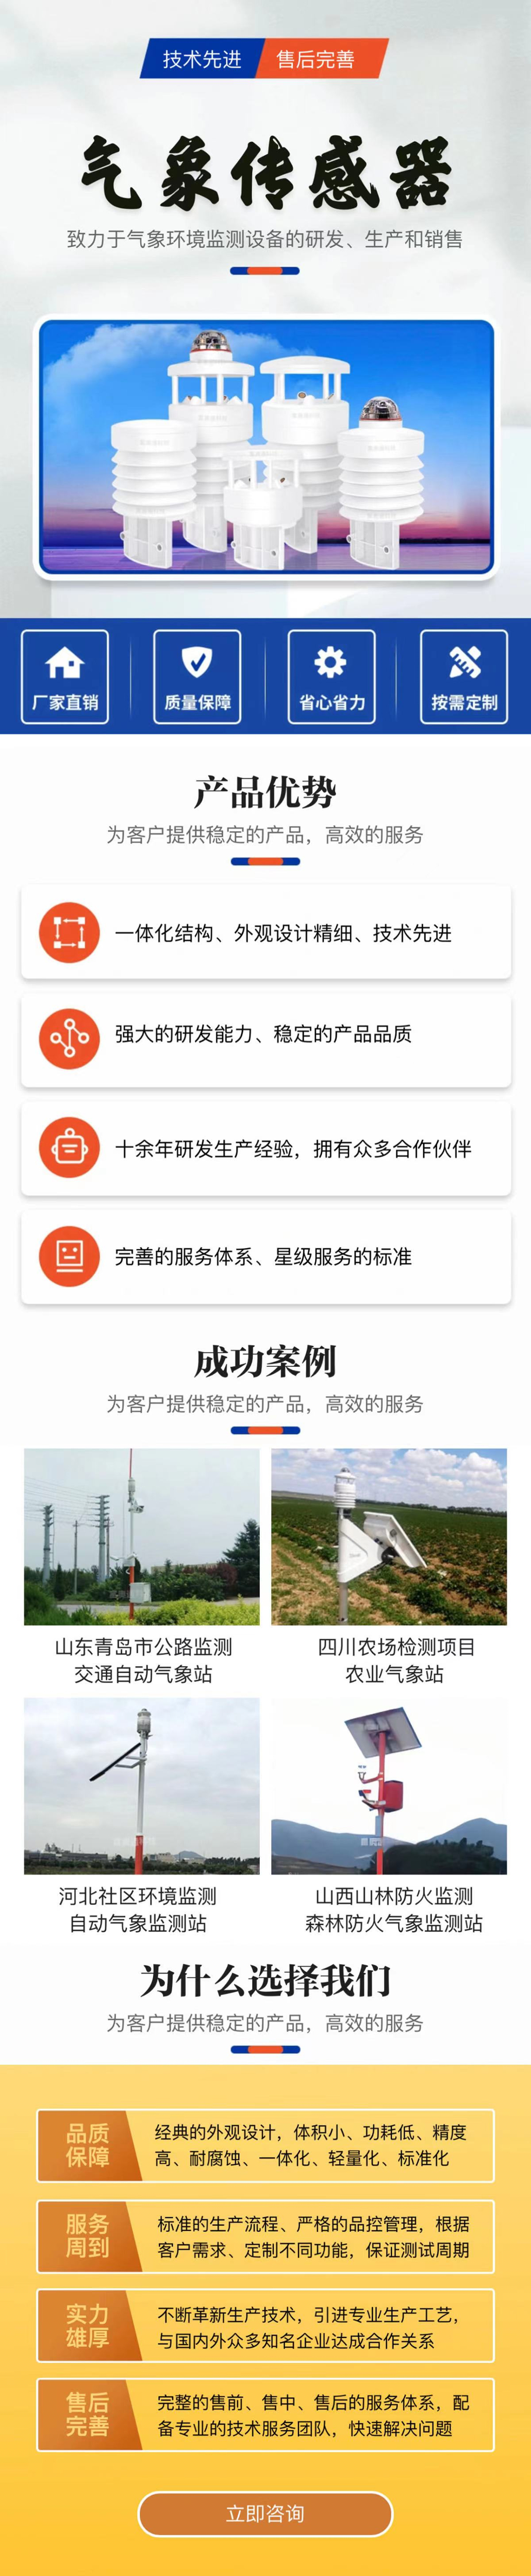 Fuaotong Meteorological Sensor Temperature, Humidity, Barometric Pressure, Wind Speed, Wind Direction, Rainfall, Ultrasonic Wind